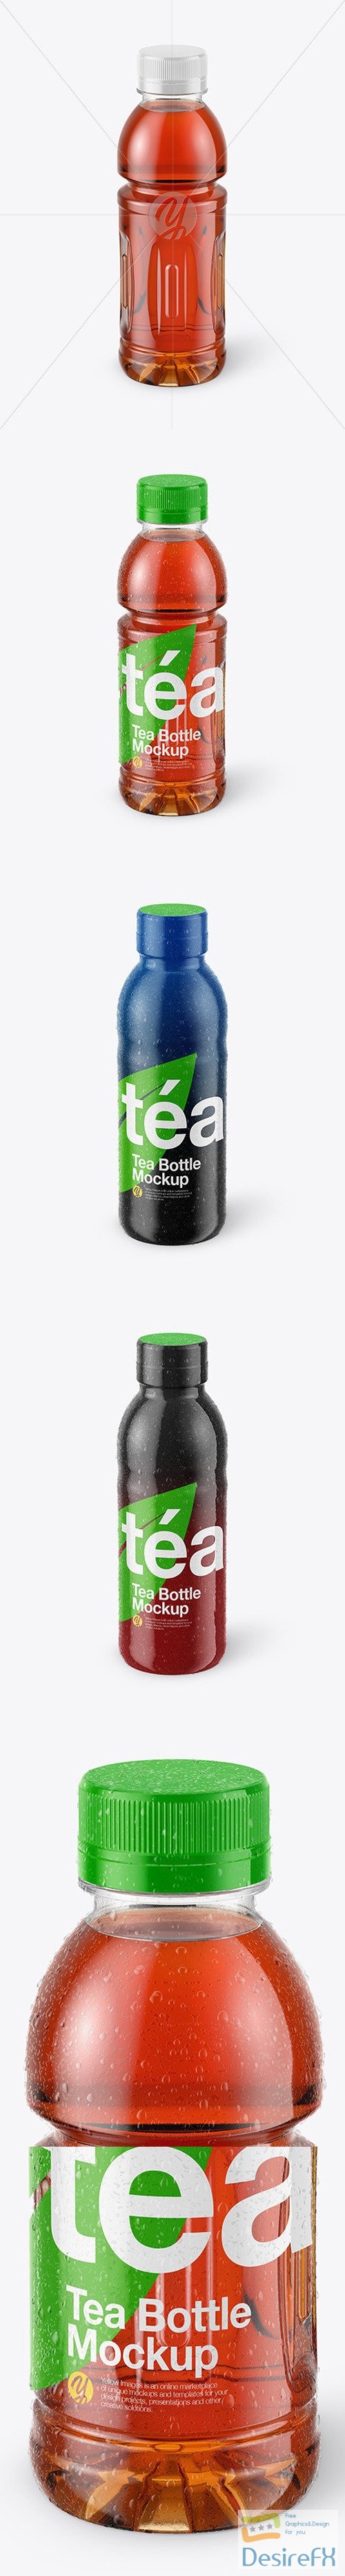 Tea Bottle with Condensation in Shrink Sleeve Mockup 48030